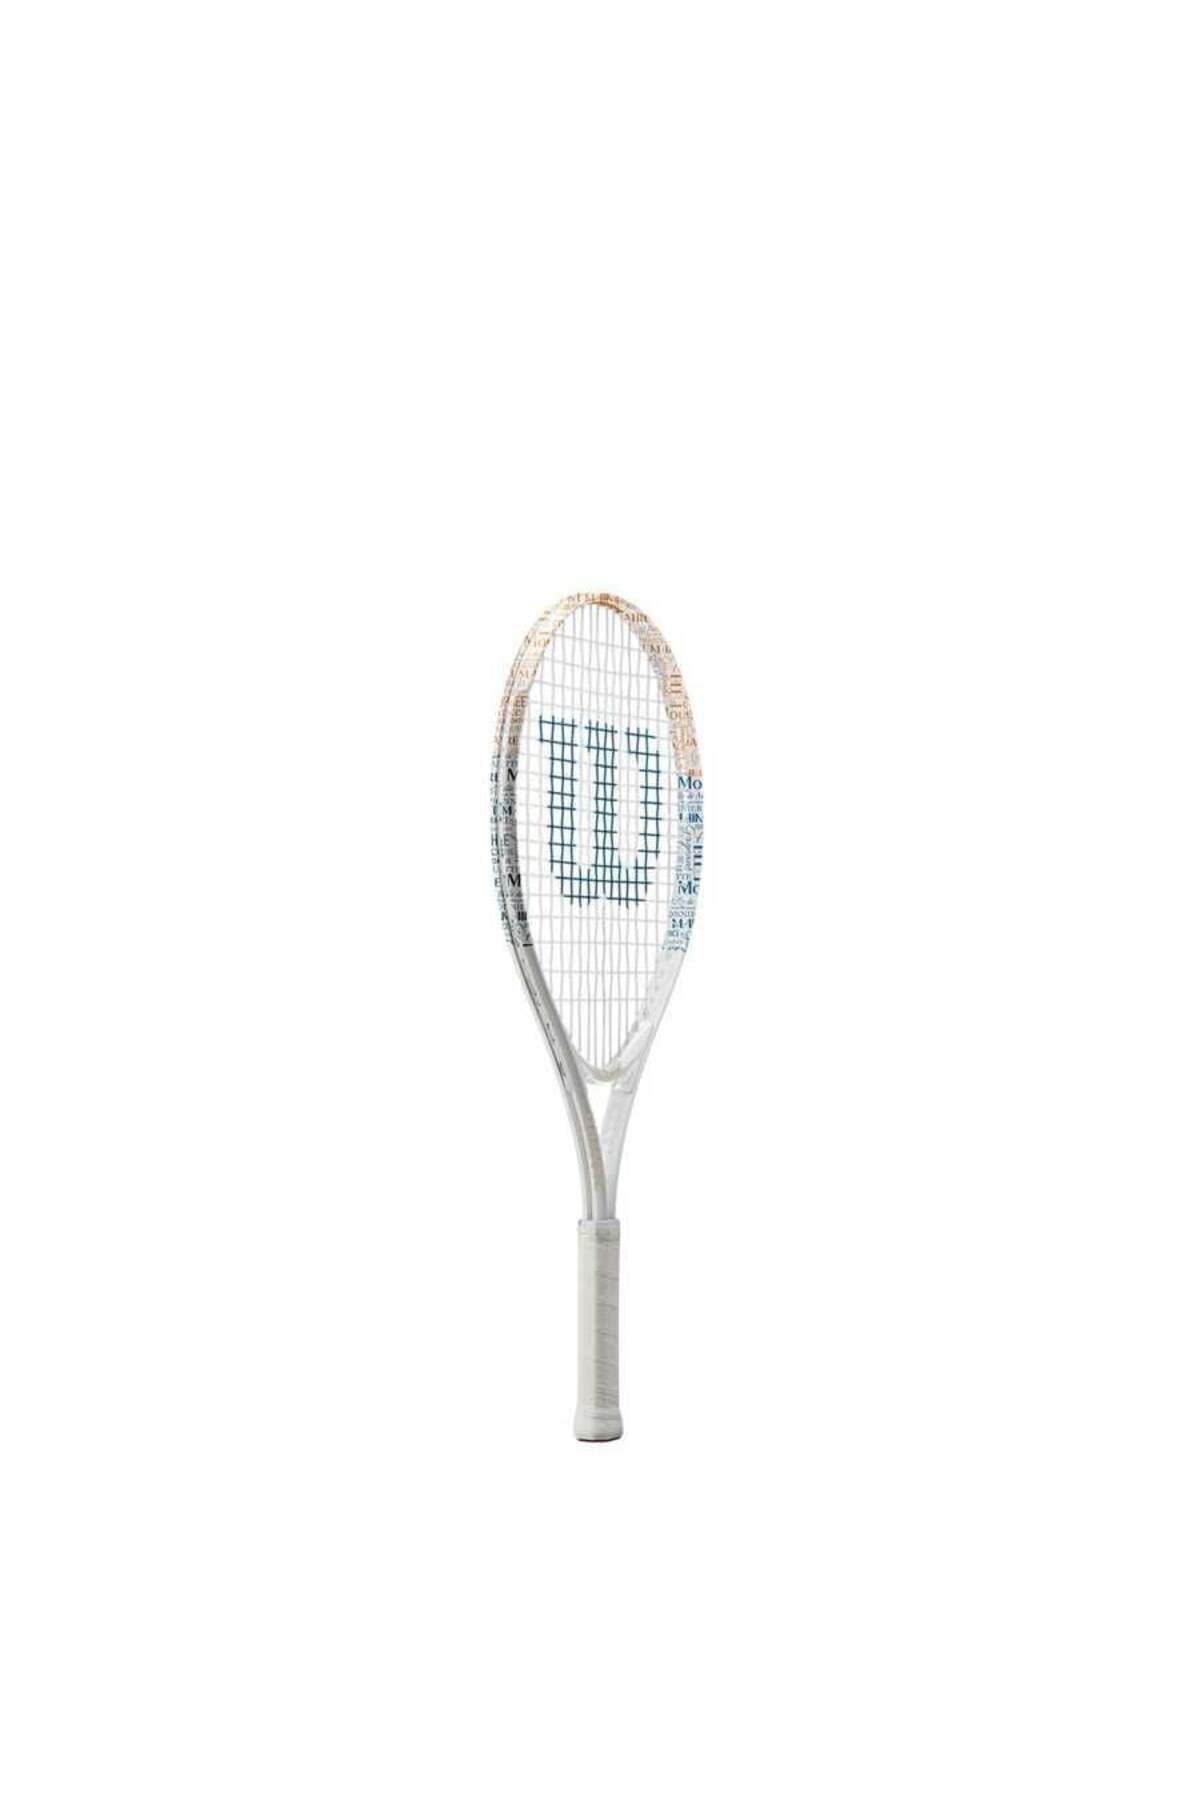 Wilson Çok Renkli Rg Elite 21 Tenis Raketi Wr086510h 180 gr 90 inch2